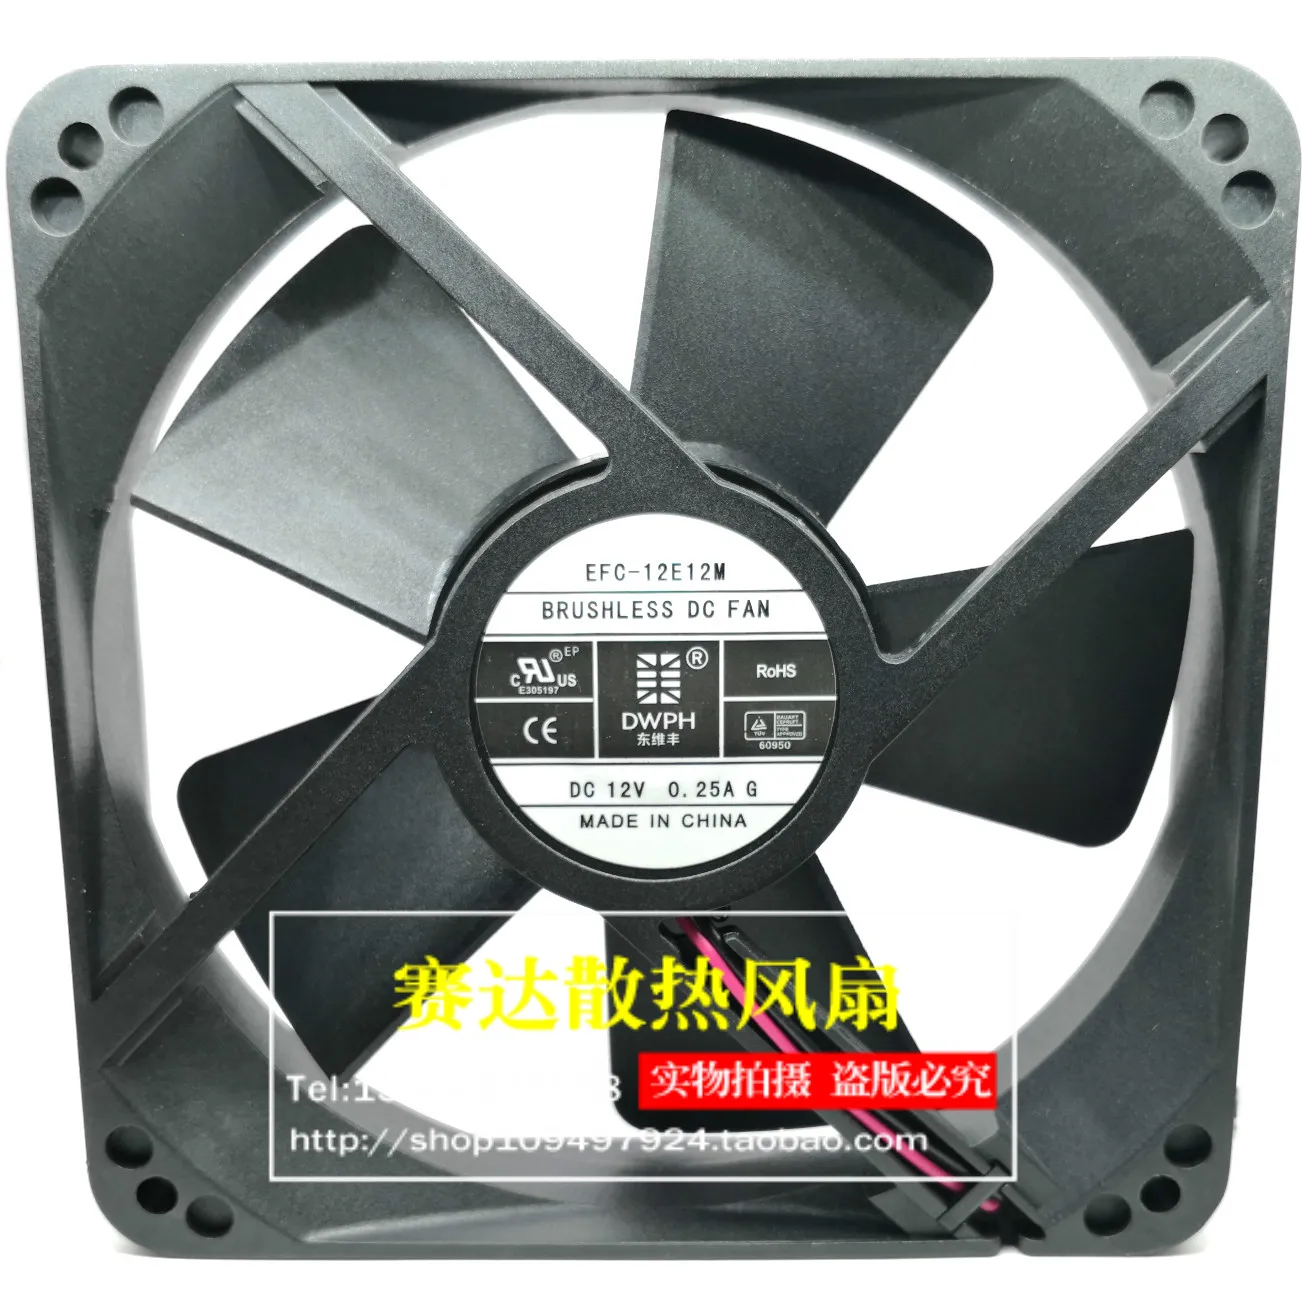 

New DWPH 12025 12V 0.25A EFC-12E12M Ball Converter Cooling Fan